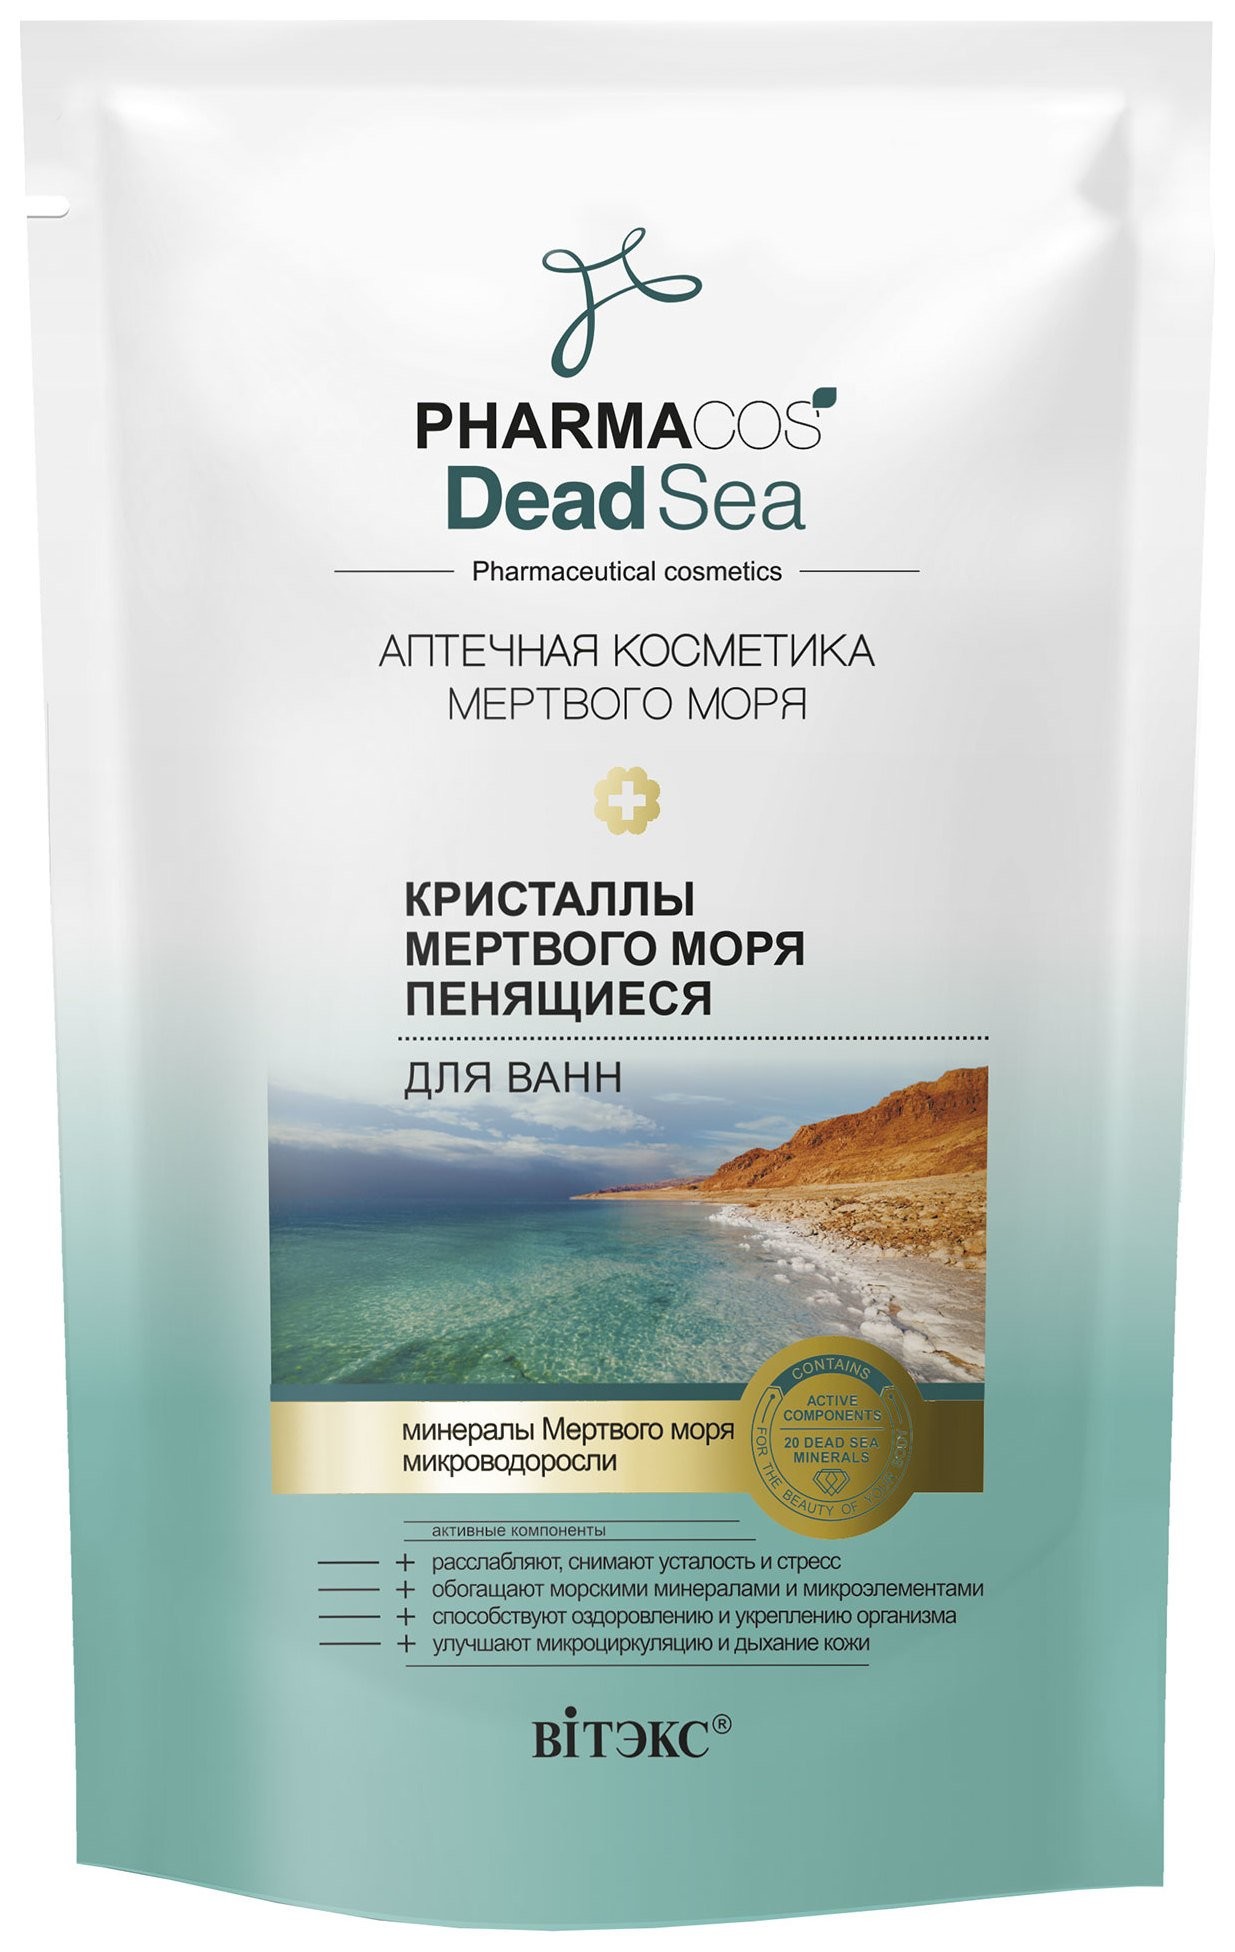 Кристаллы Мертвого моря для ванн пенящиеся Белита - Витекс Pharmacos Dead Sea